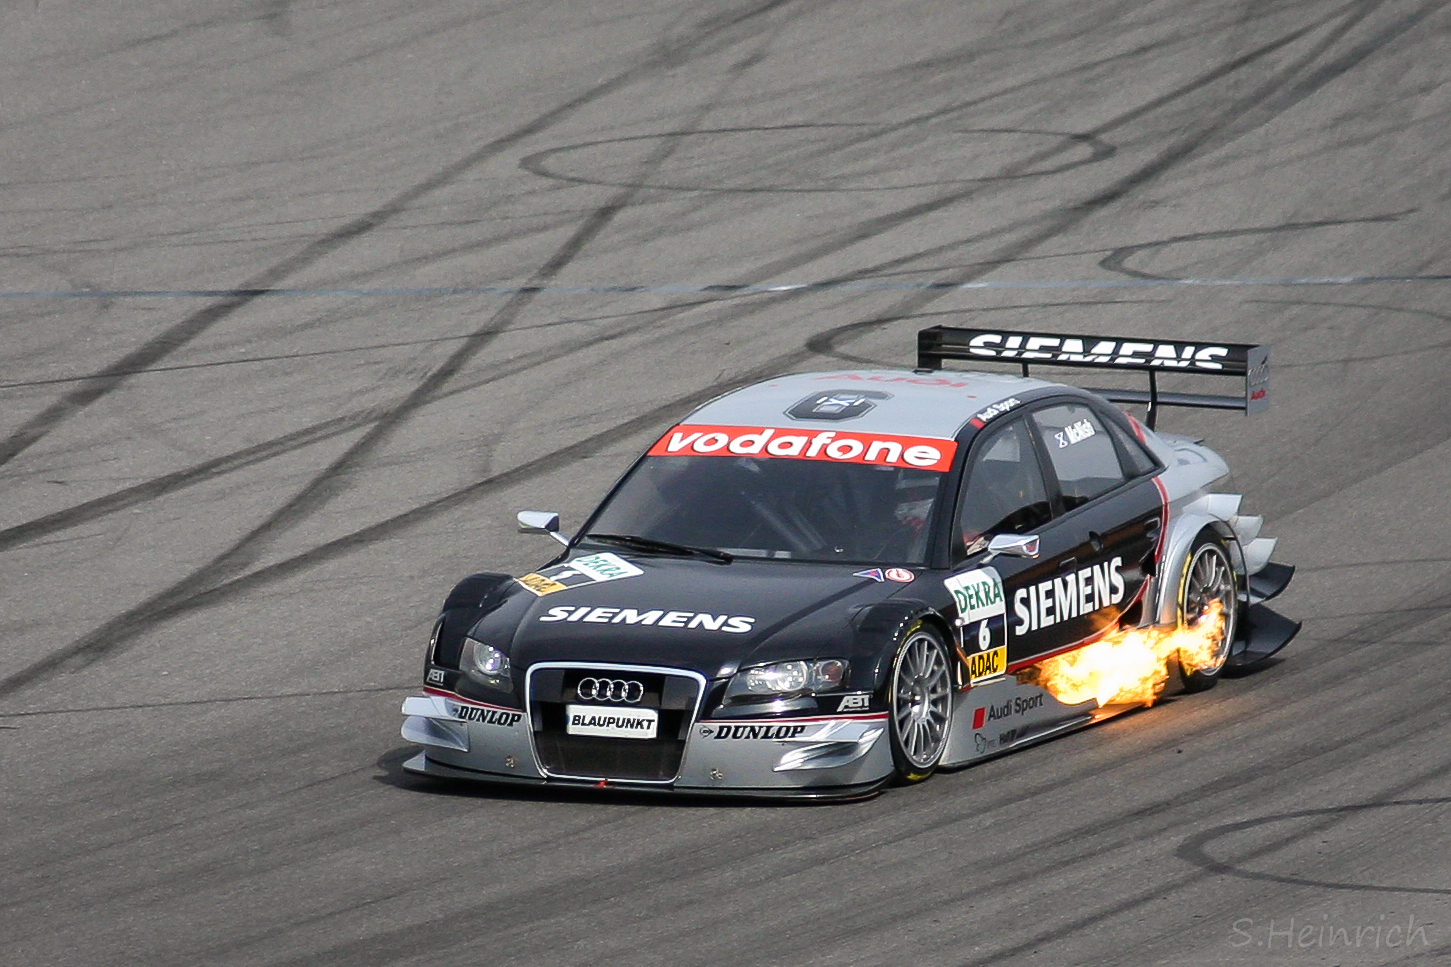 Audi on Fire